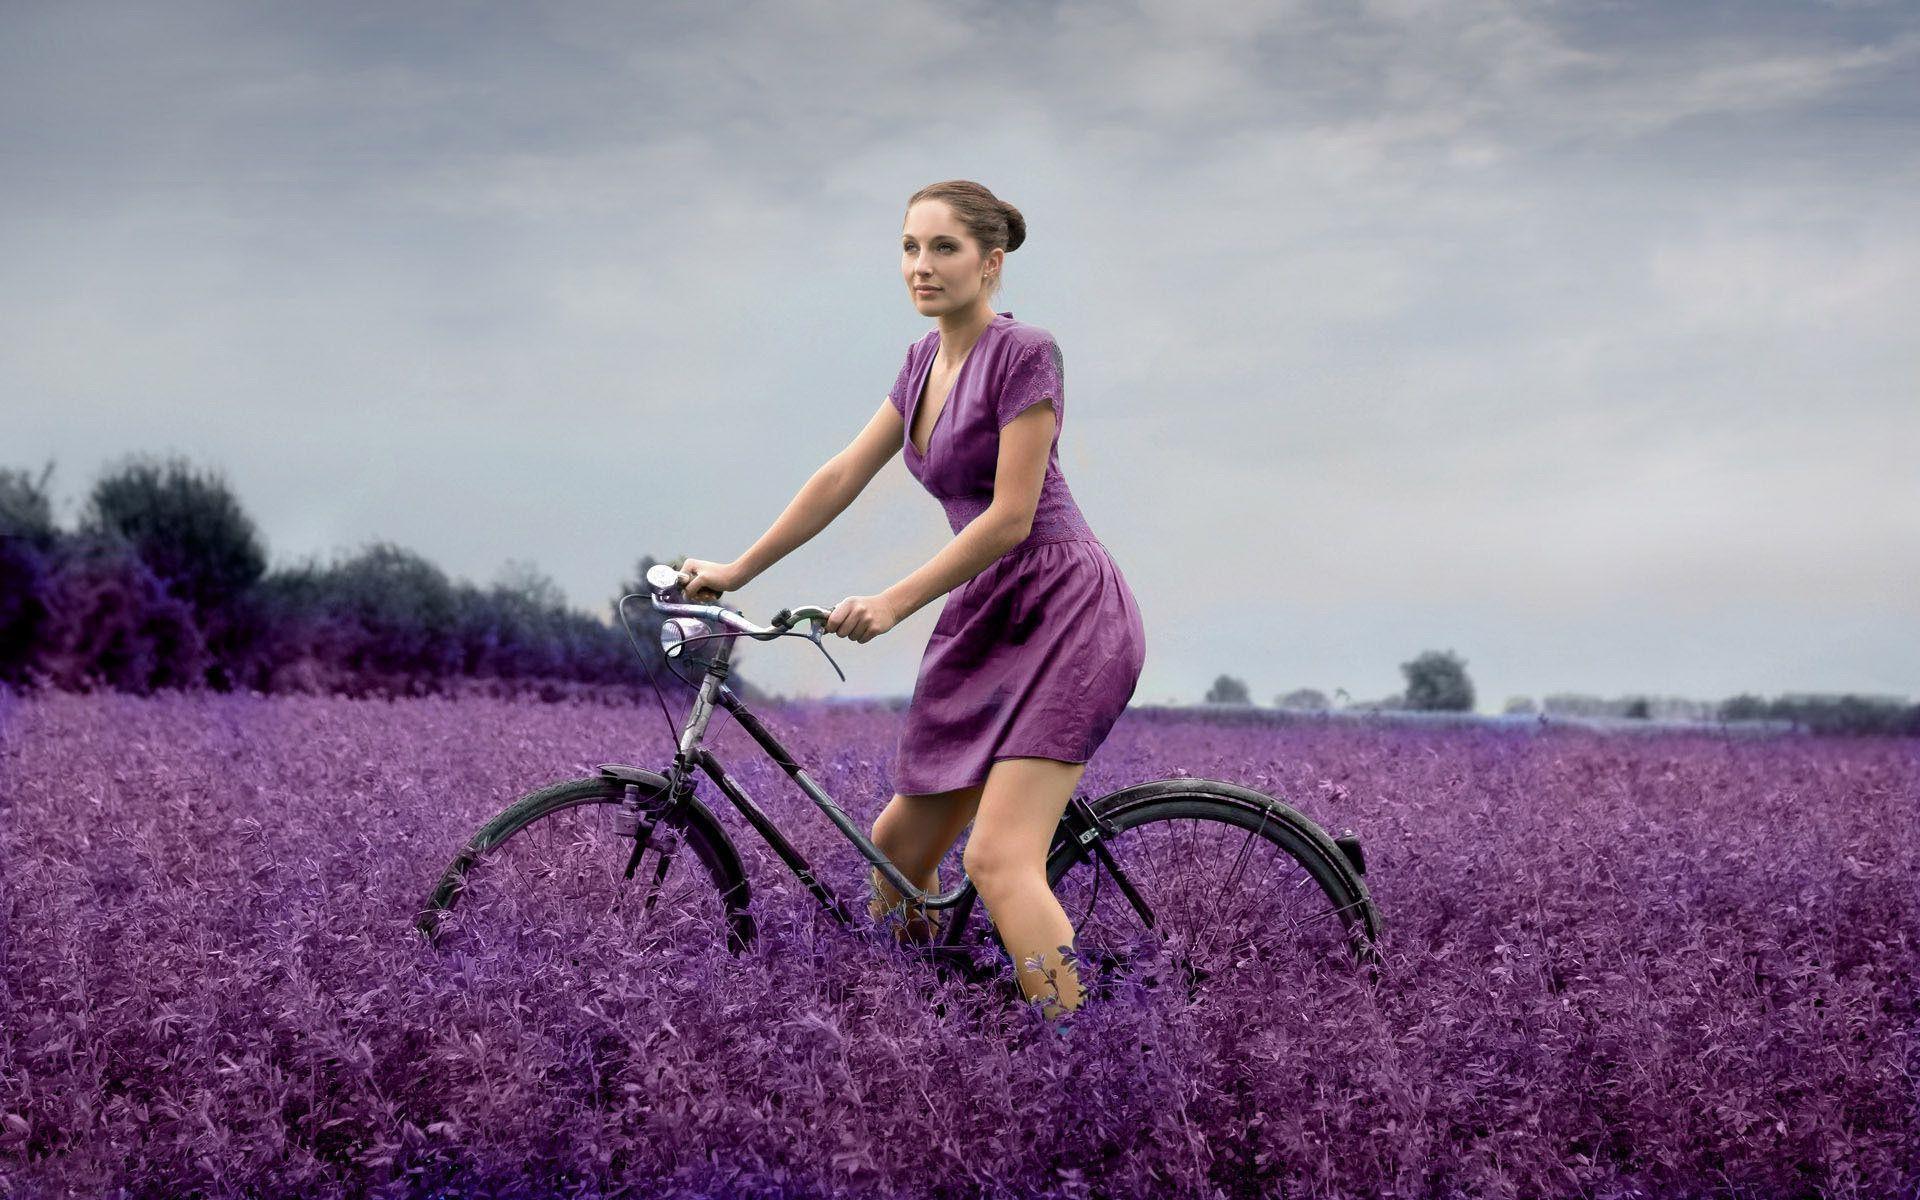 Riding the bike on a wild flowers field girl wallpaper